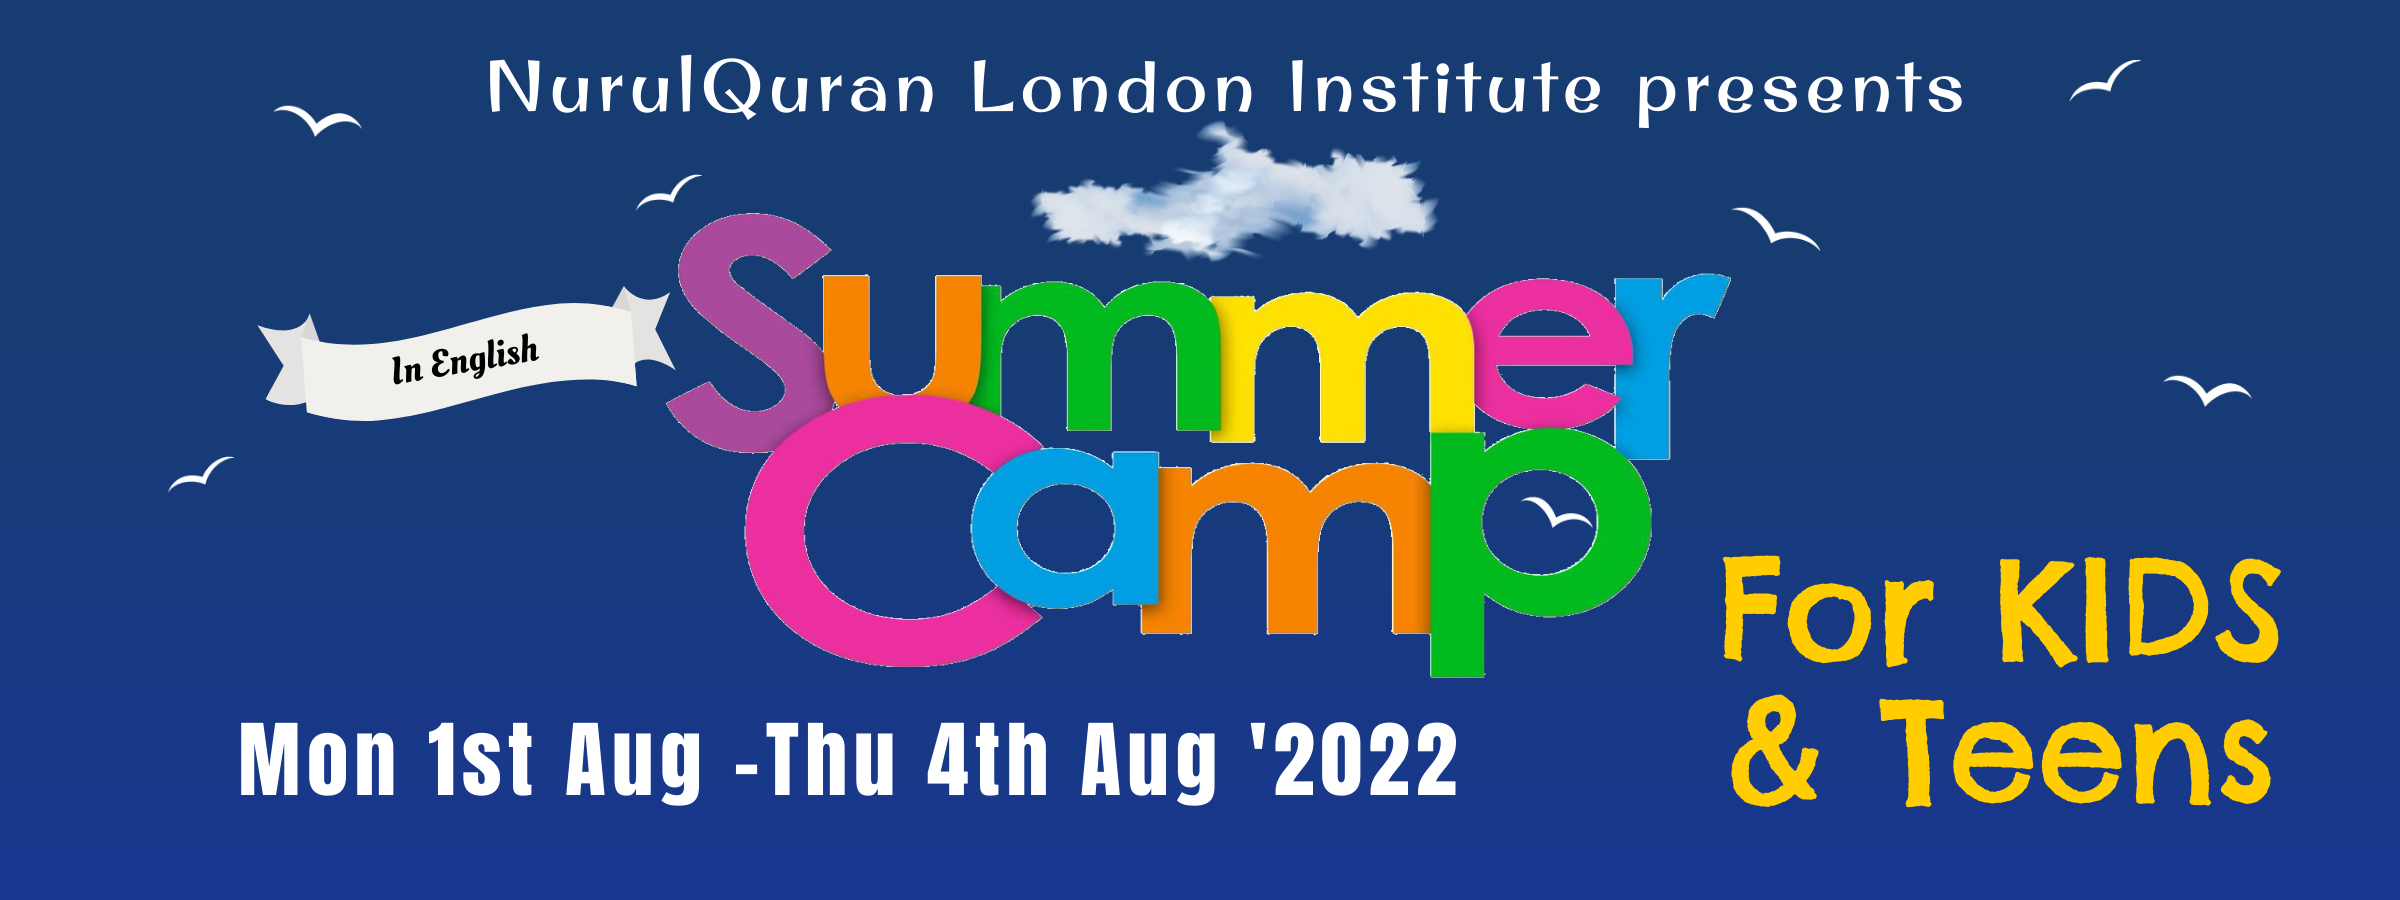 NQ Kids Summer Camp in london and birmingham